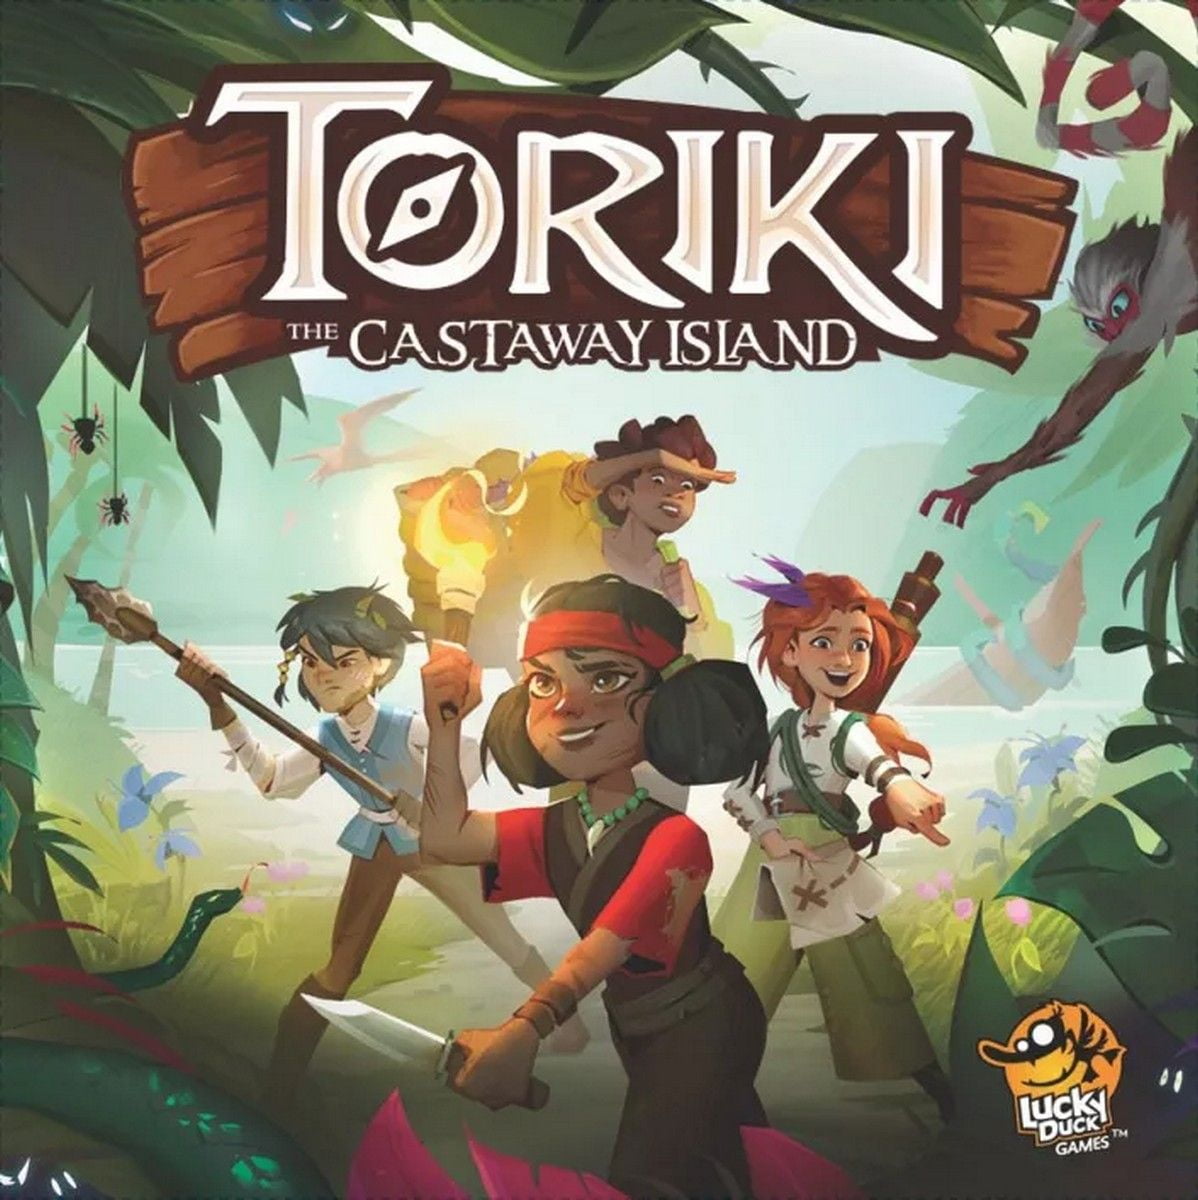 Toriki: The Castaway Island